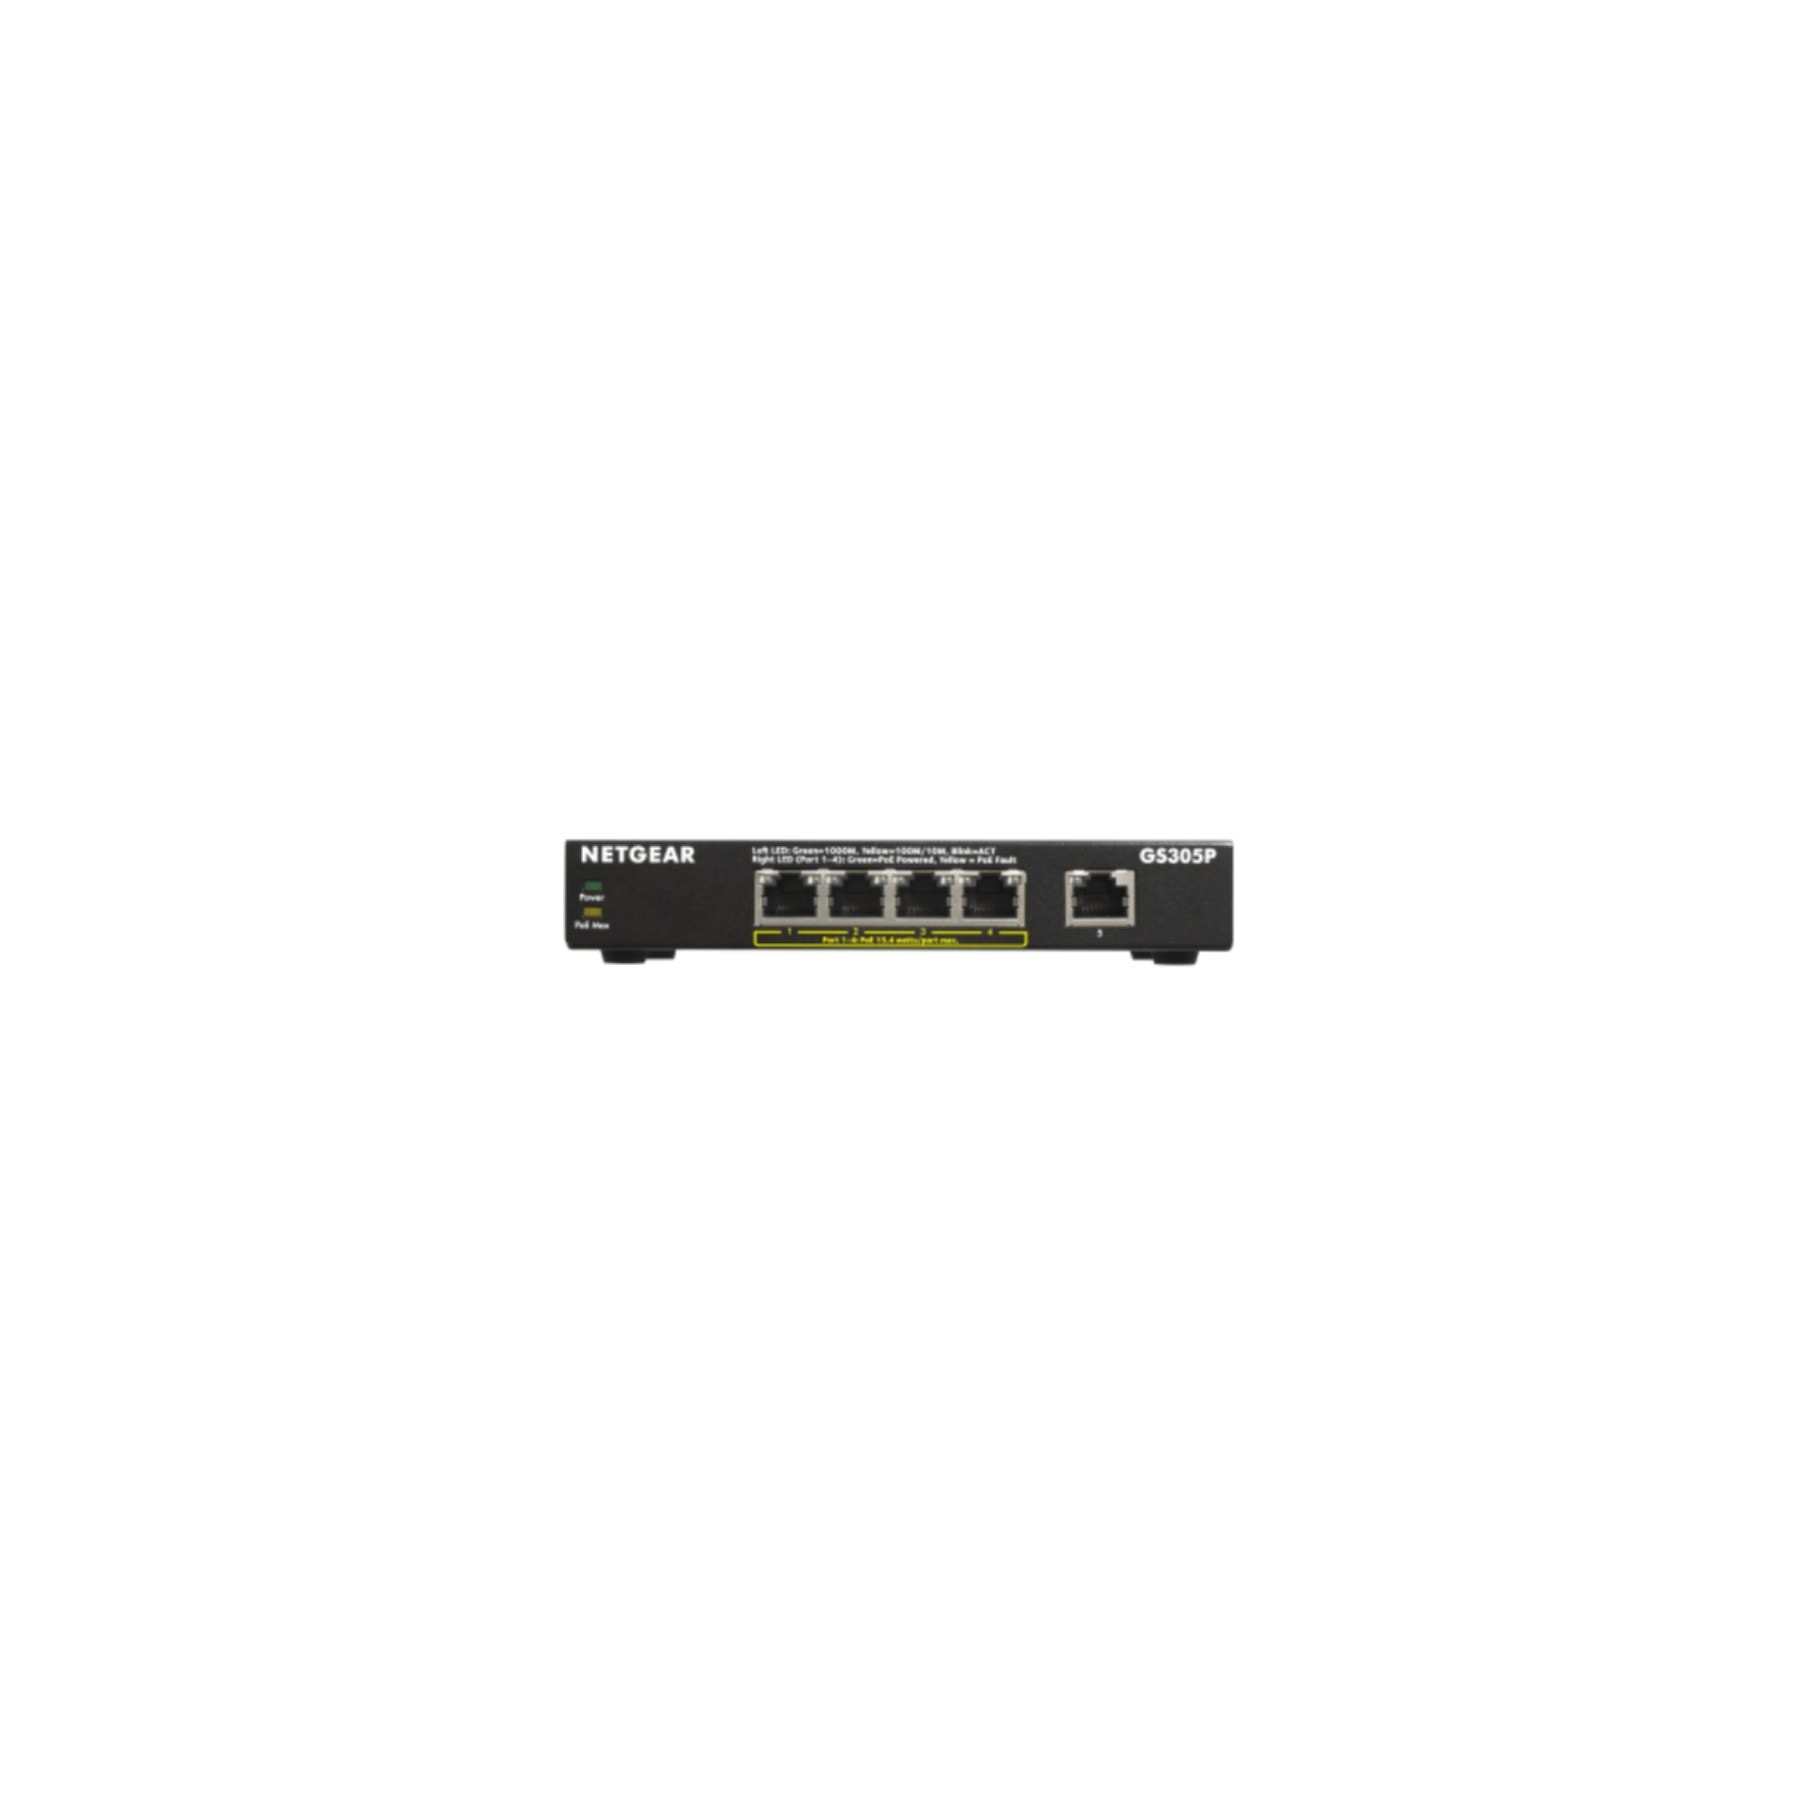 NETGEAR Netzwerk-Switch »GS305Pv2«